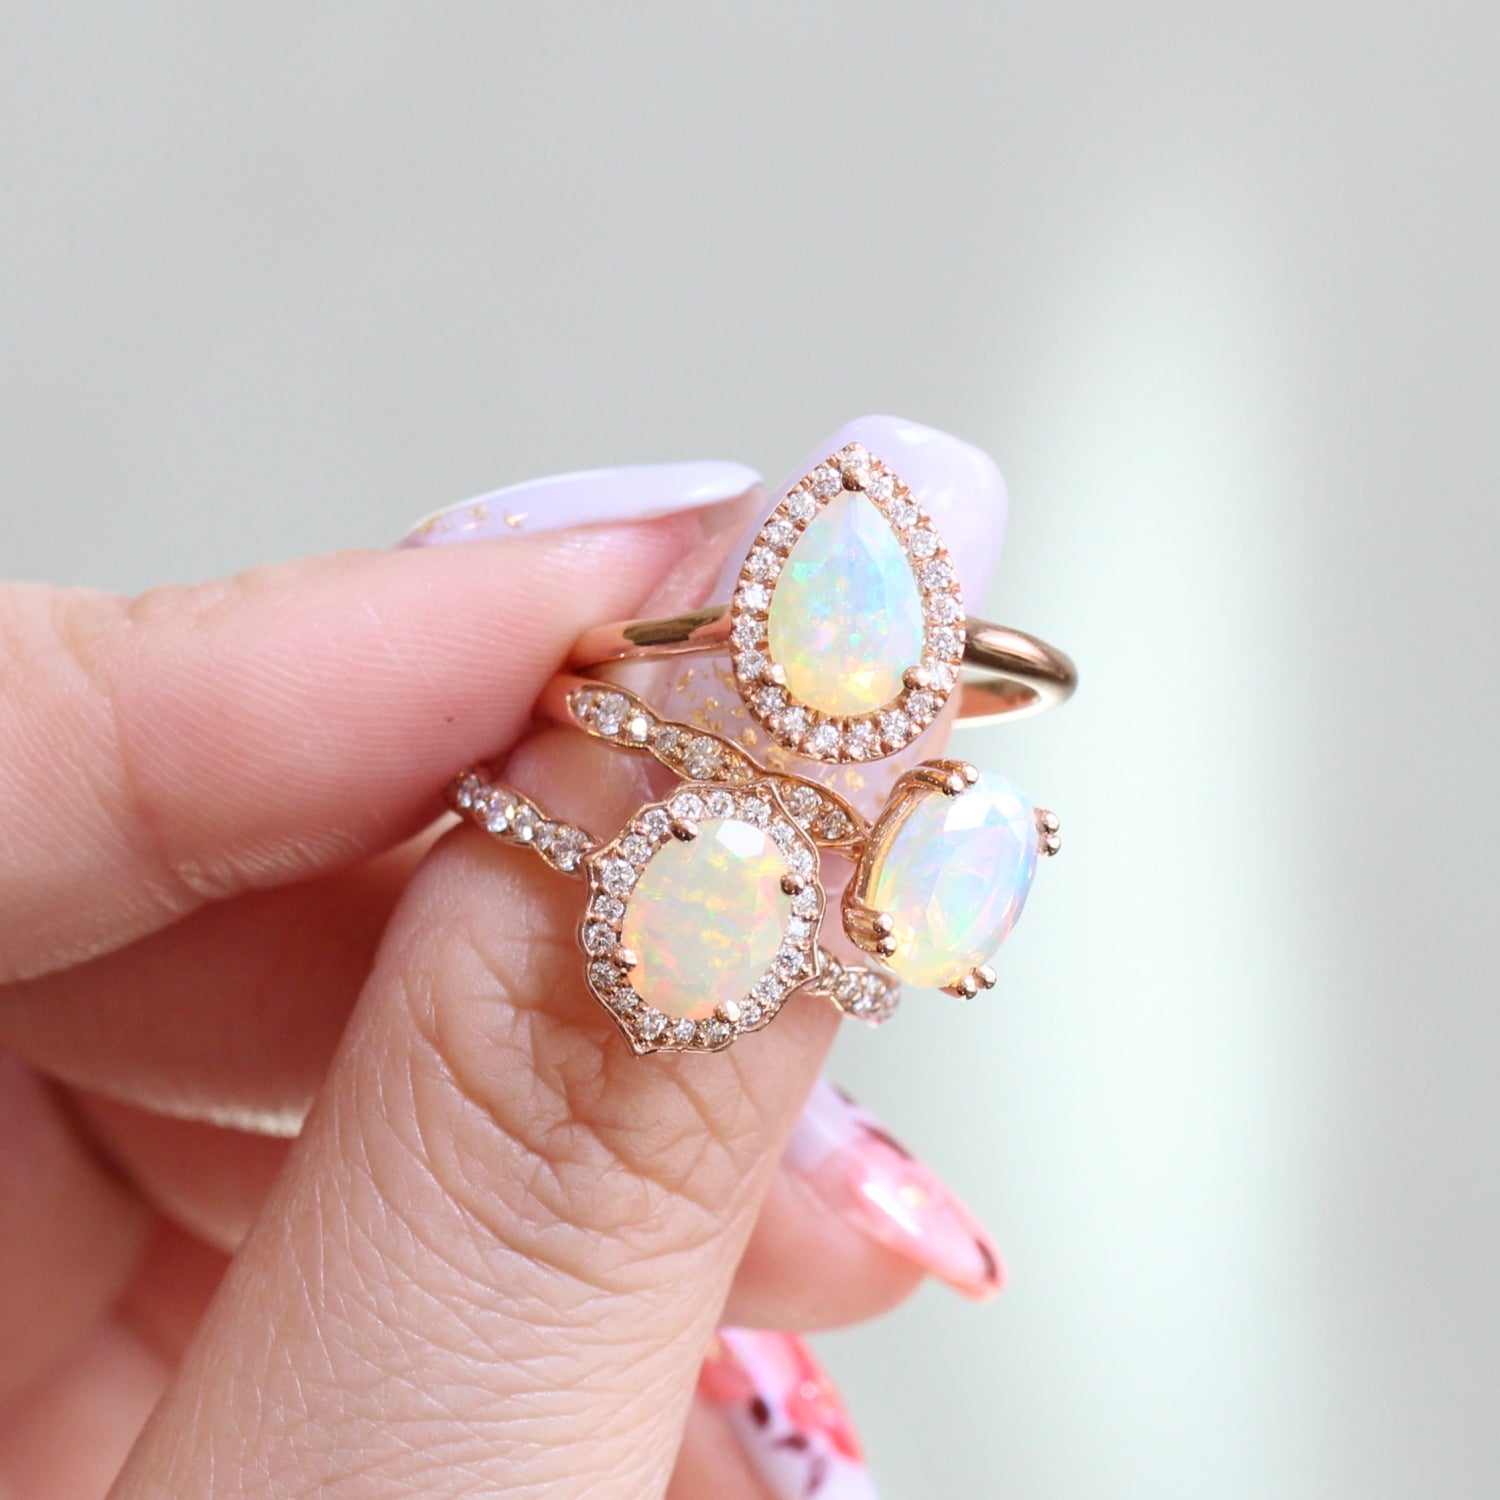 Benefits of wearing opal rings for women